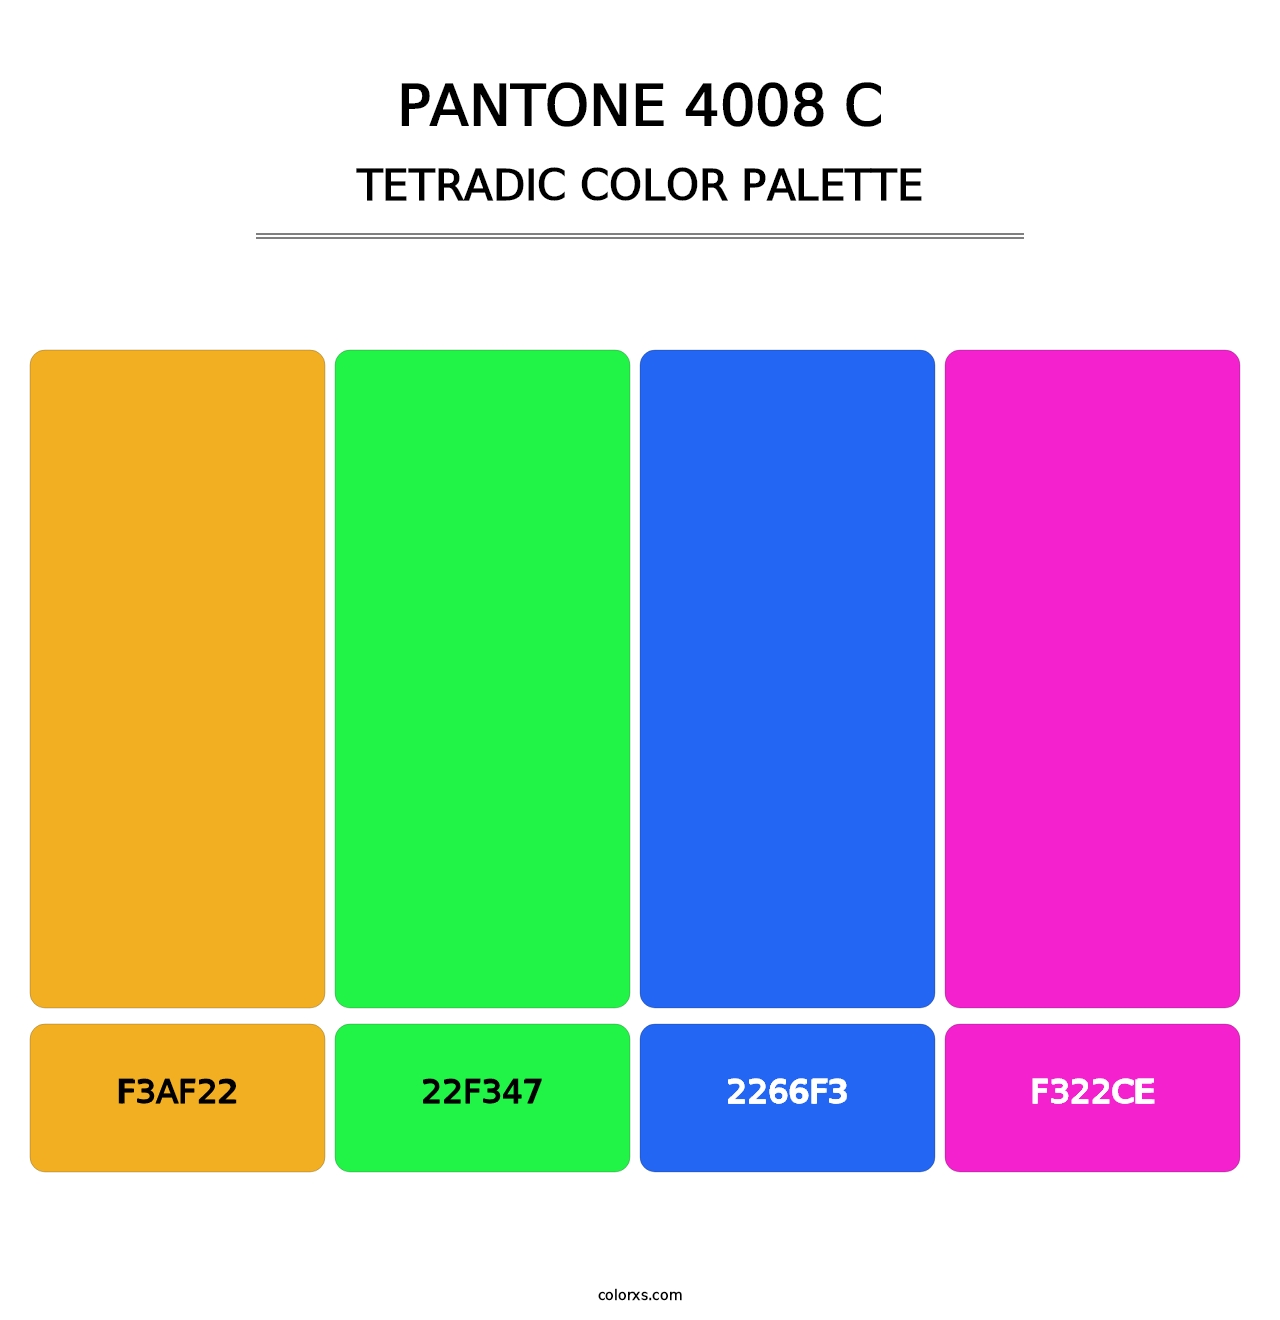 PANTONE 4008 C - Tetradic Color Palette